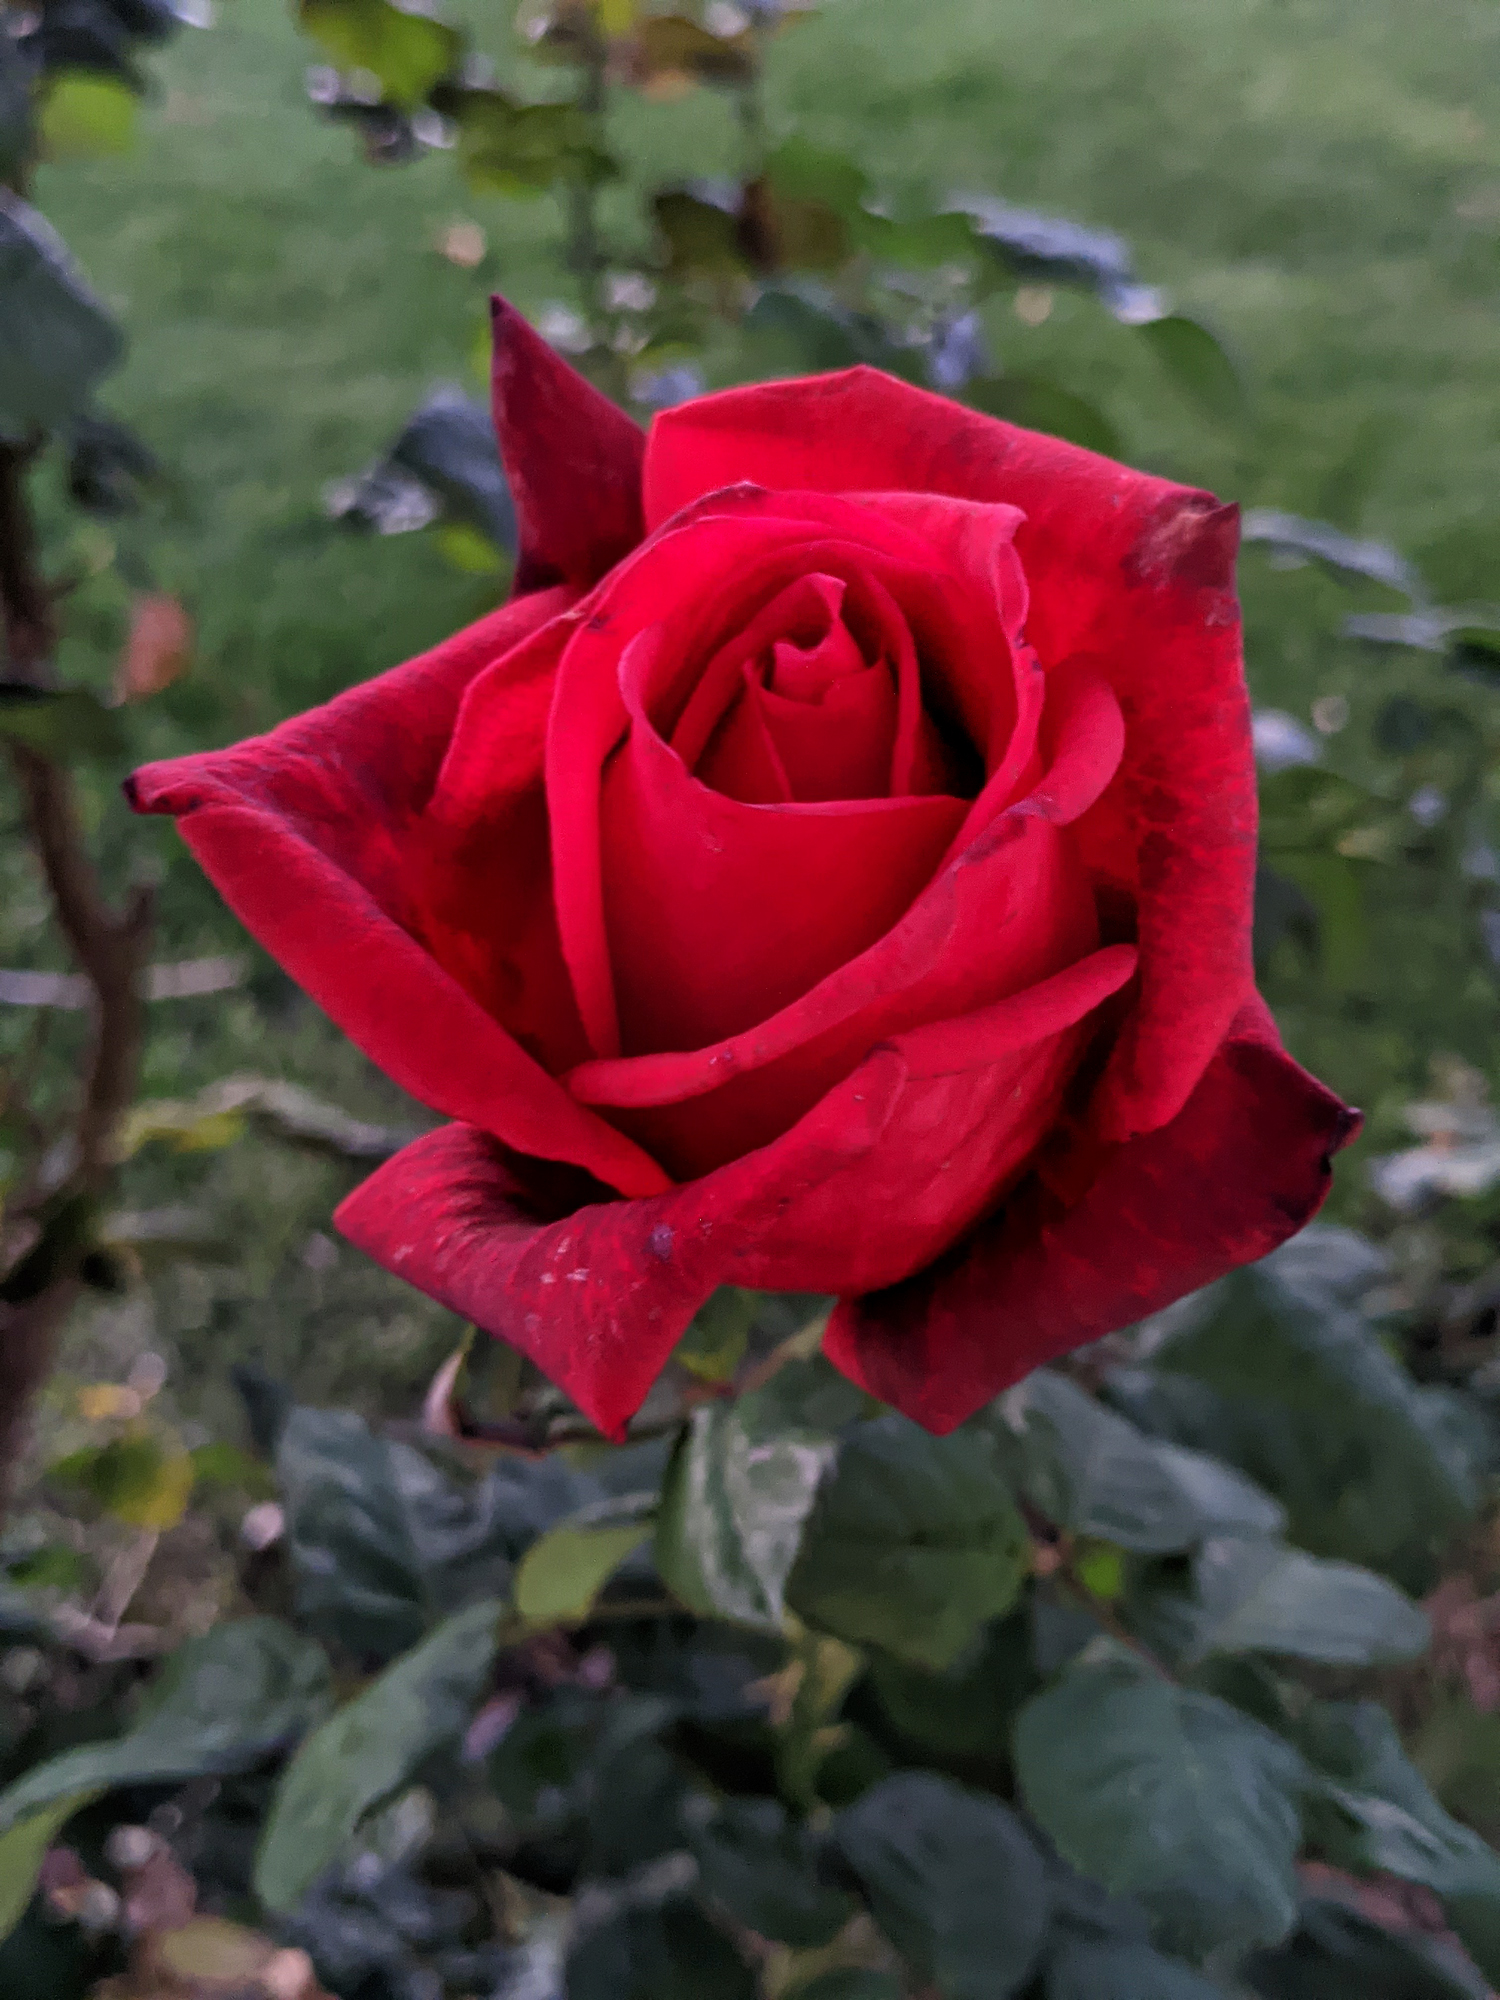 A red tea rose bloom